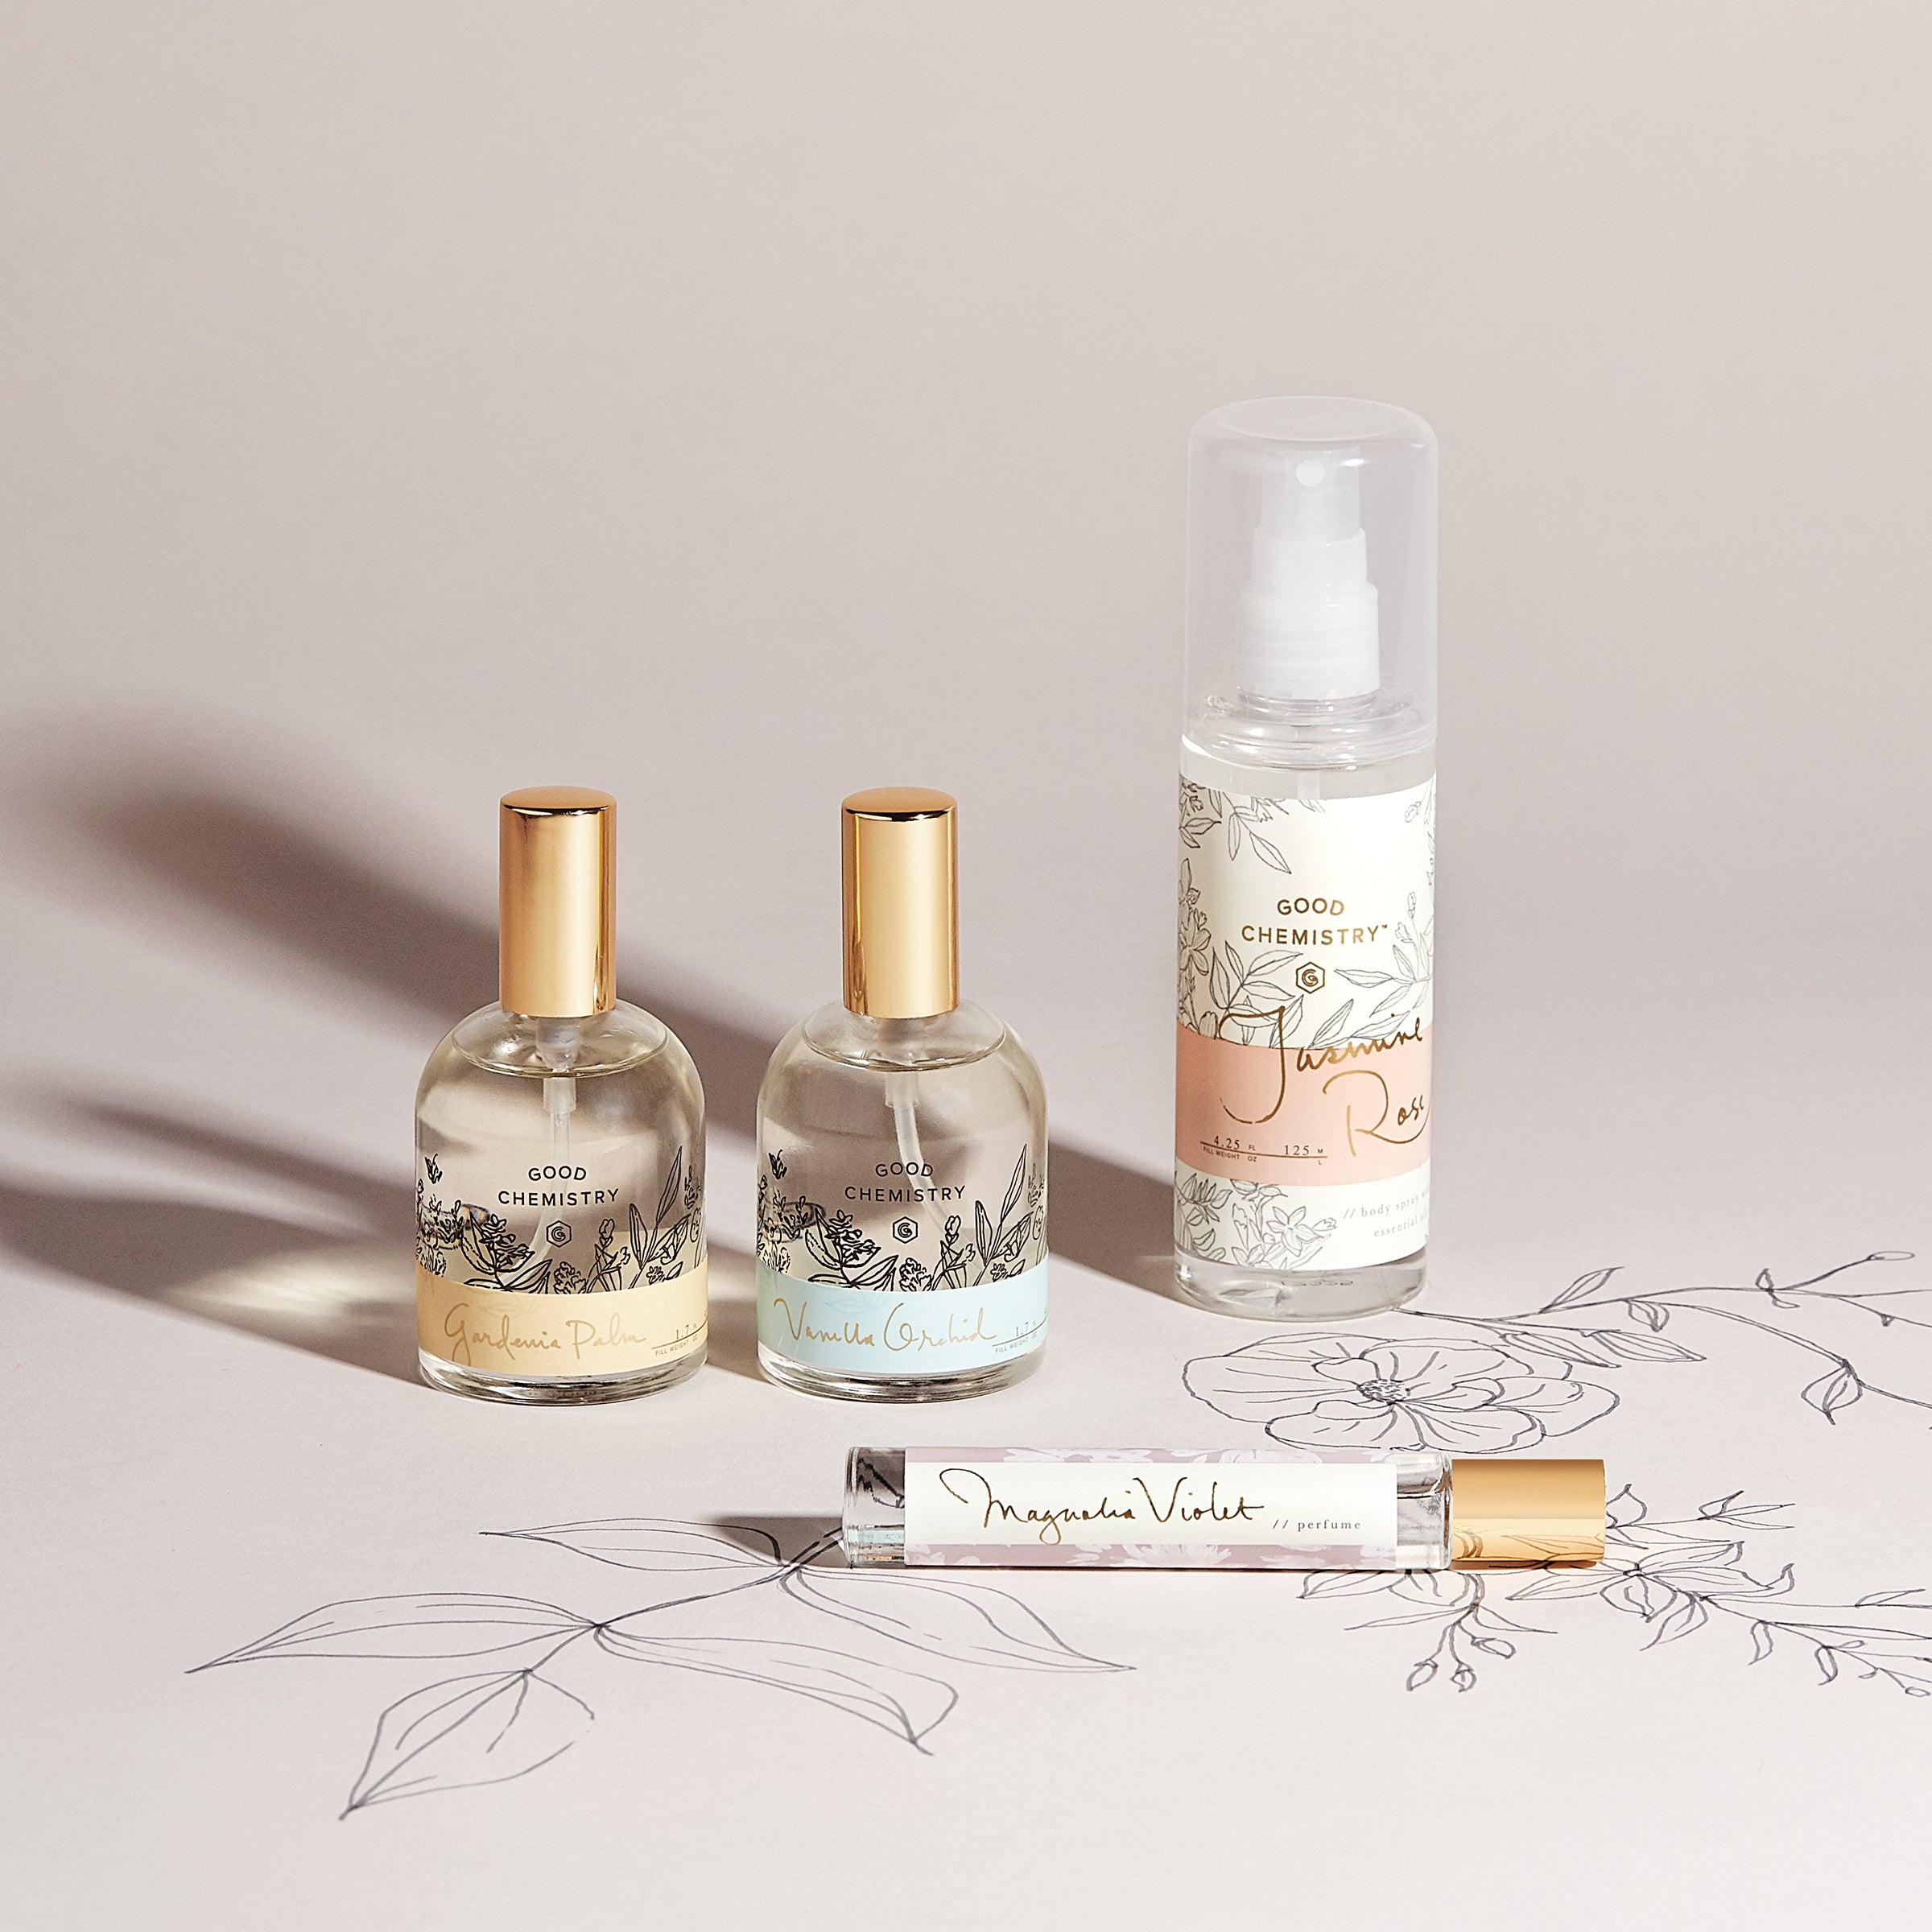 Good Chemistry® Travel Spray Eau De Parfum Perfume - Coco Blush